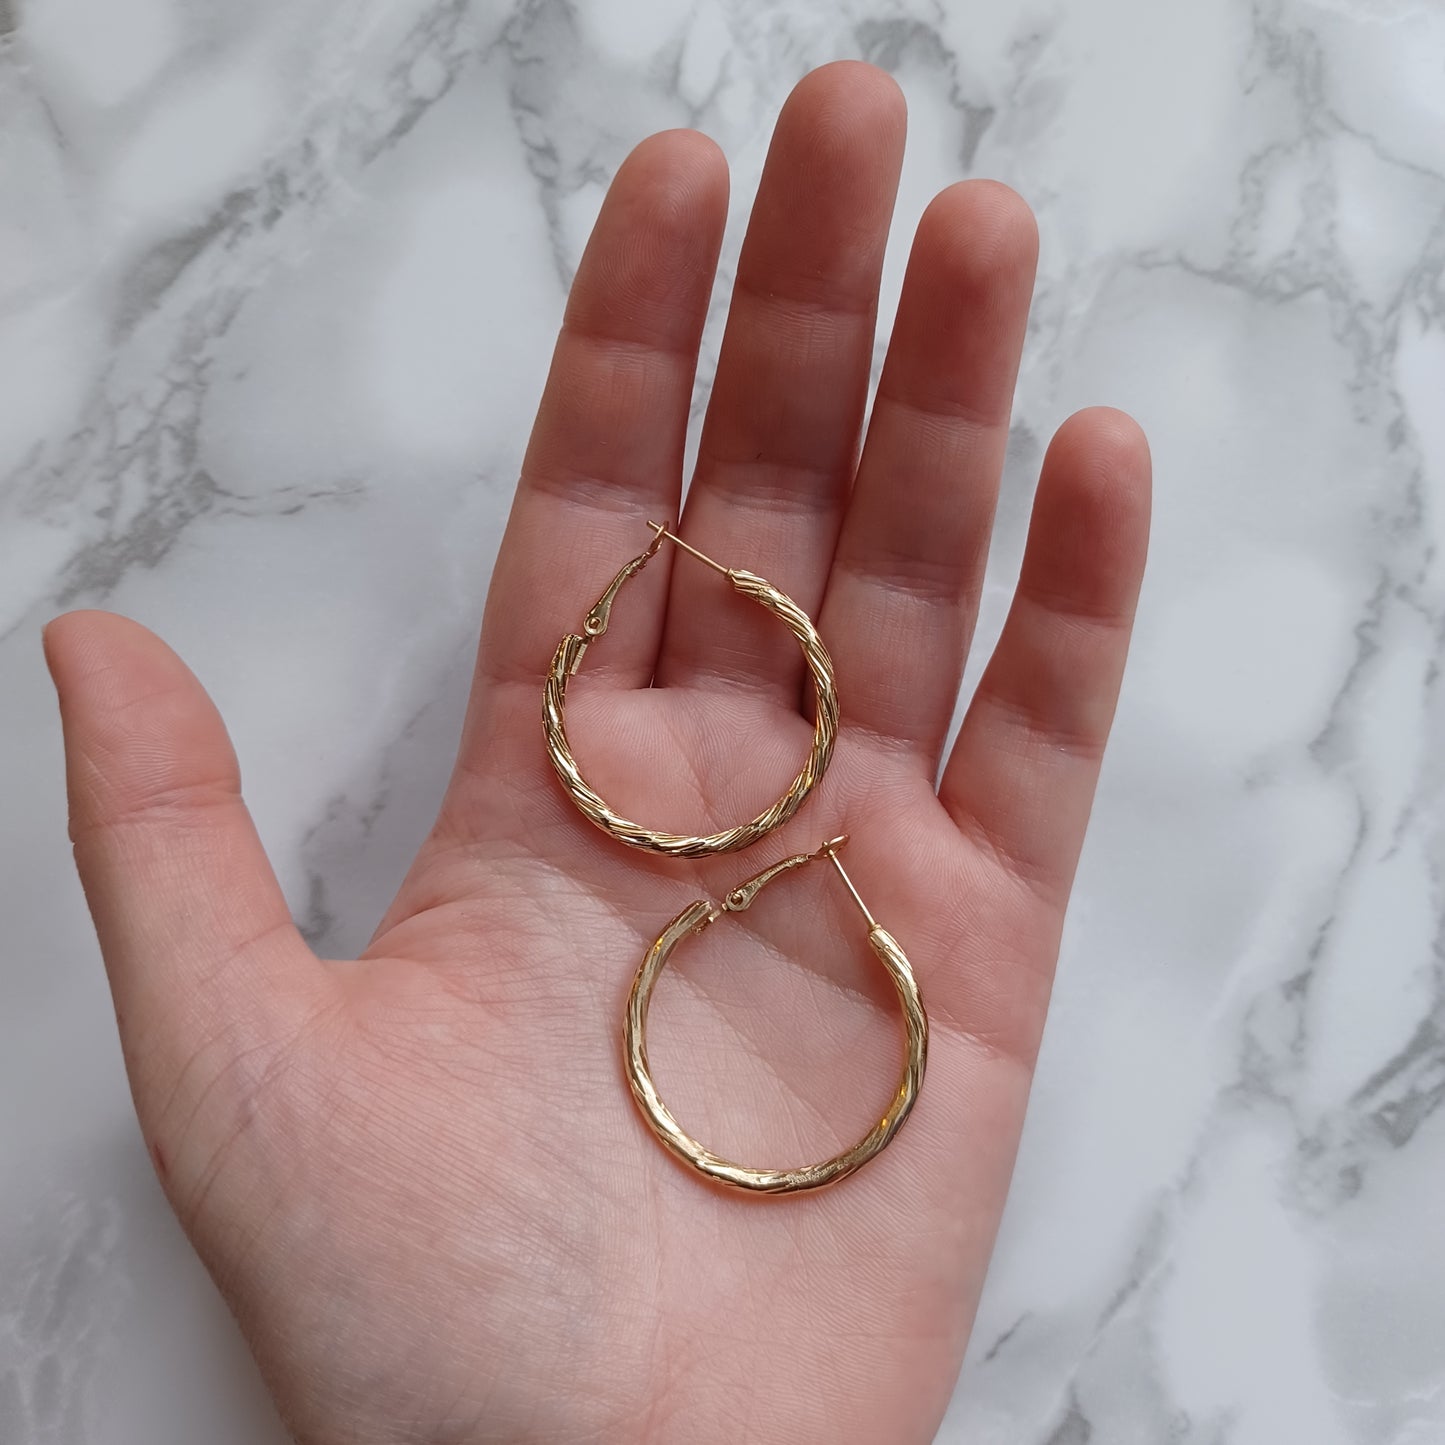 Boucles d'oreilles anneaux or ronds texturés/ Textured round gold hoop earrings